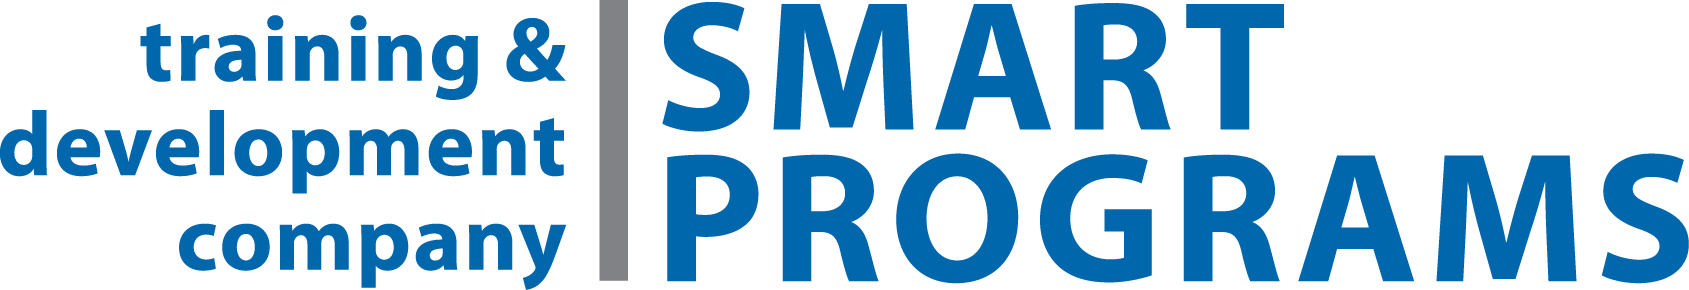 Smart-programs